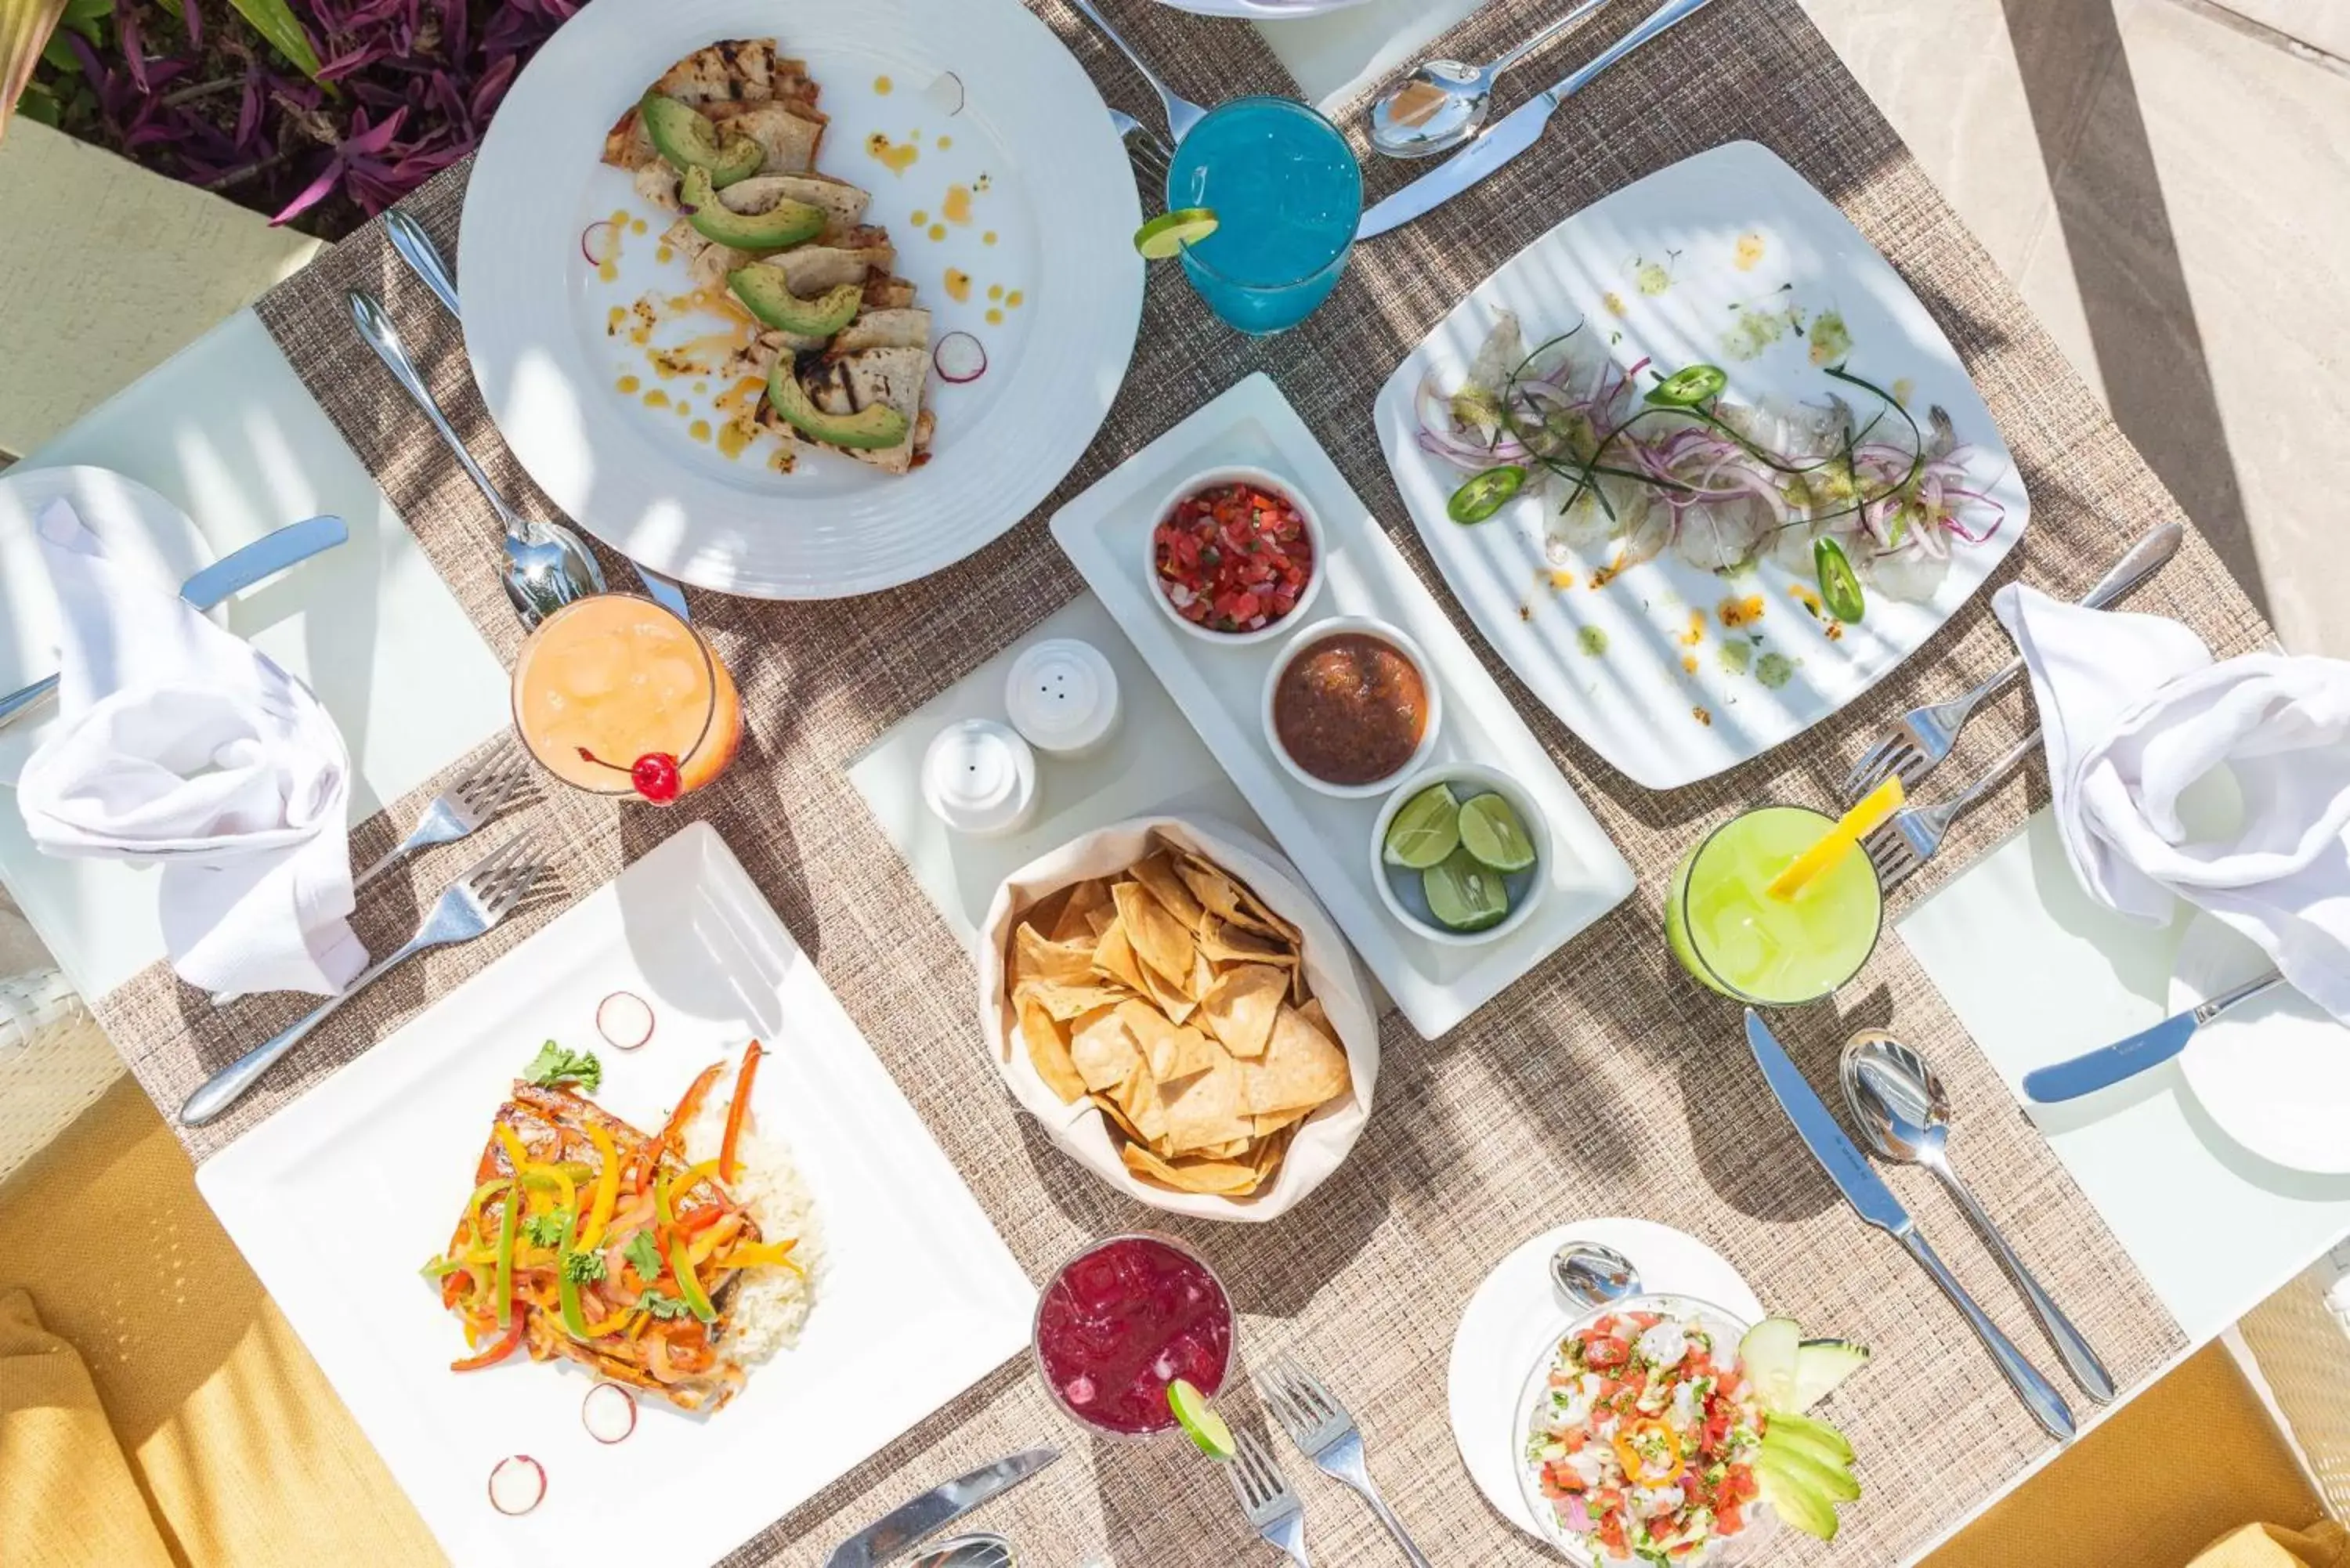 Restaurant/places to eat in DoubleTree by Hilton Mazatlan, SIN